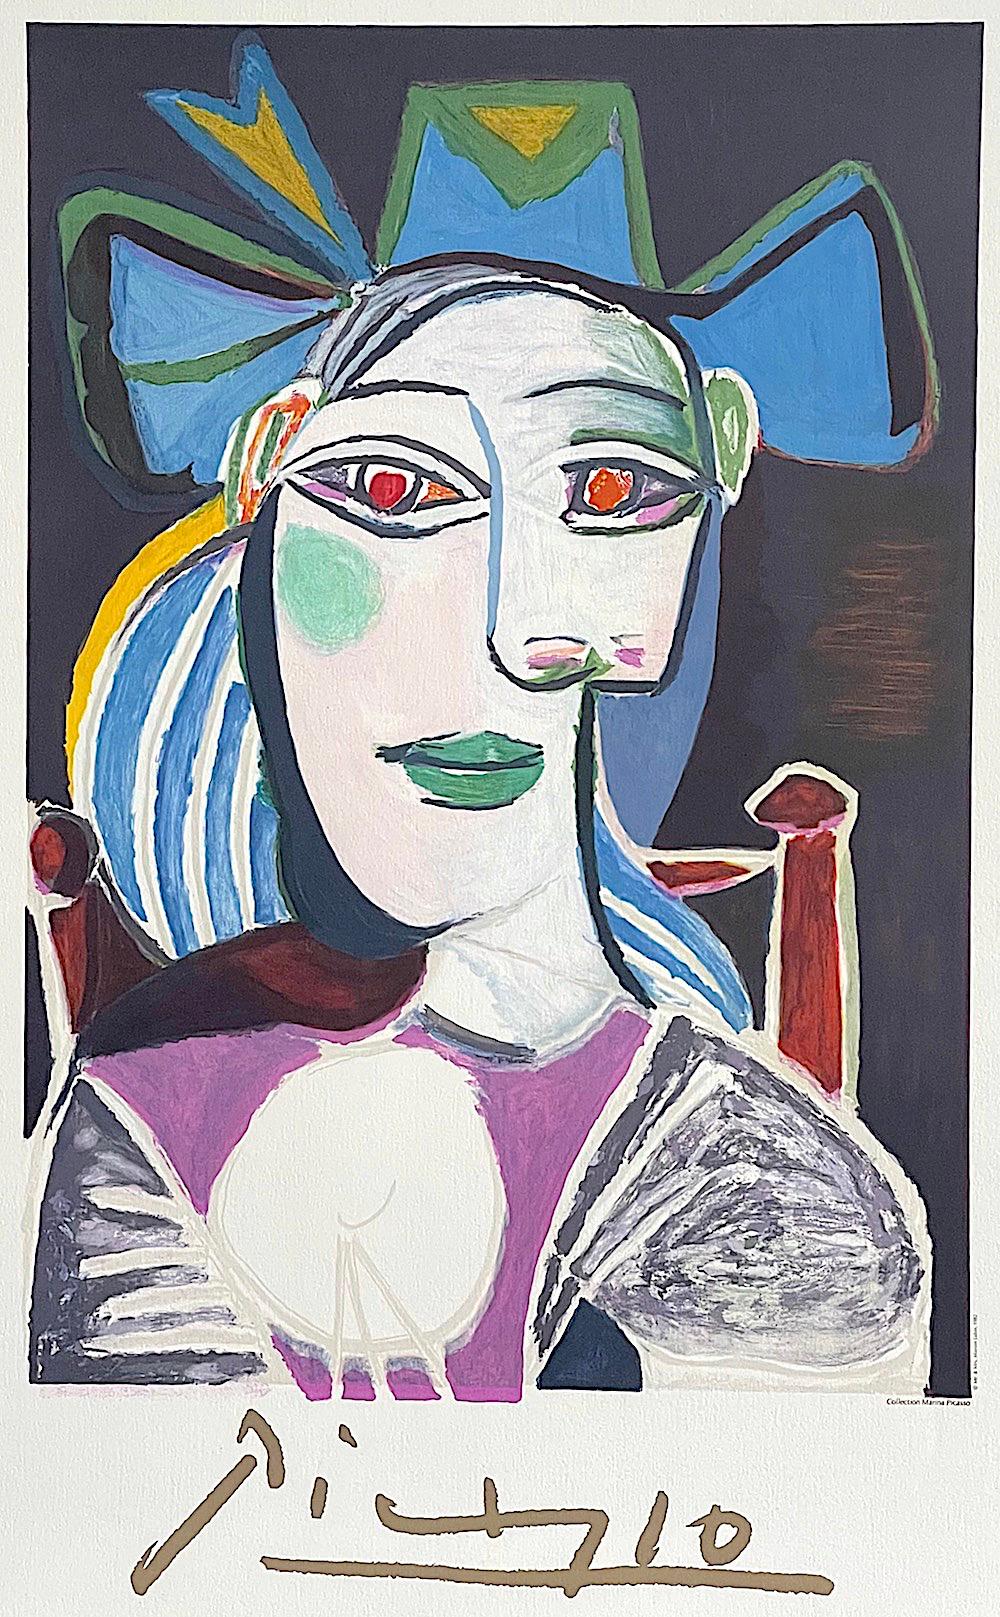 BUSTE DE FEMME CHAPEAU BLEU Lithographie, sitzende Frau mit blauem Hut und grünen Lippen – Print von (after) Pablo Picasso